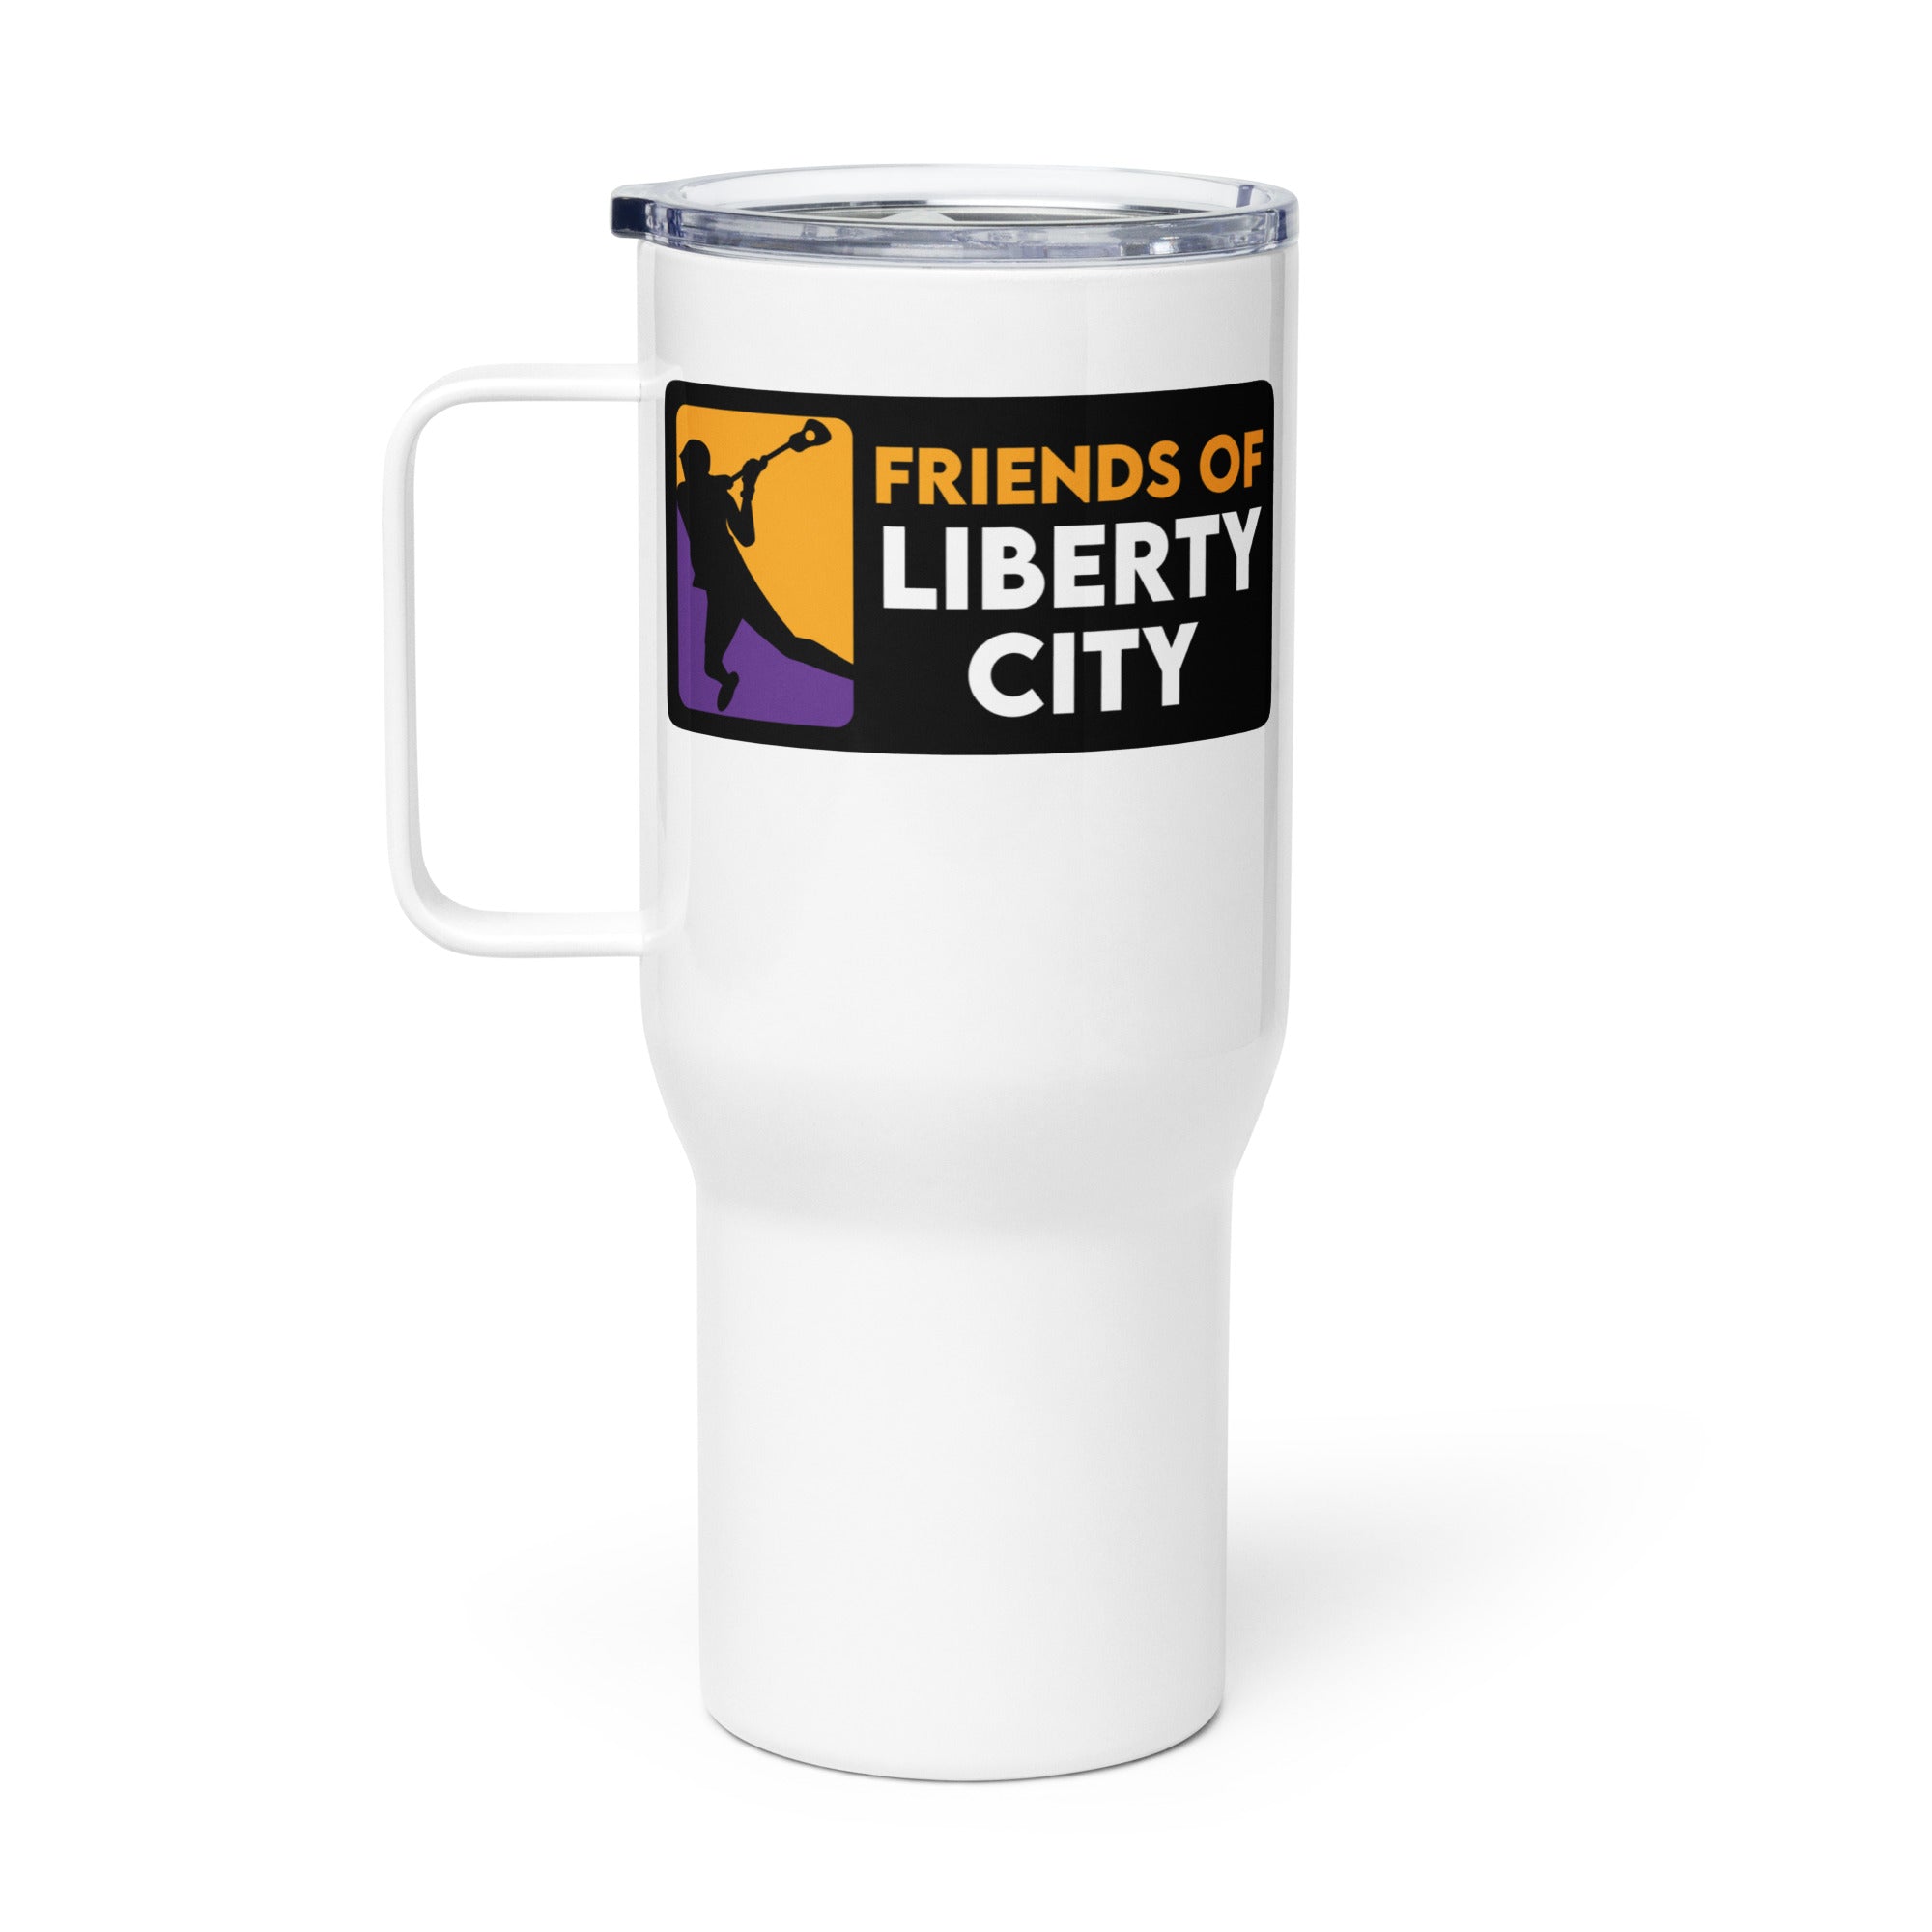 Tacolcy Travel mug with a handle